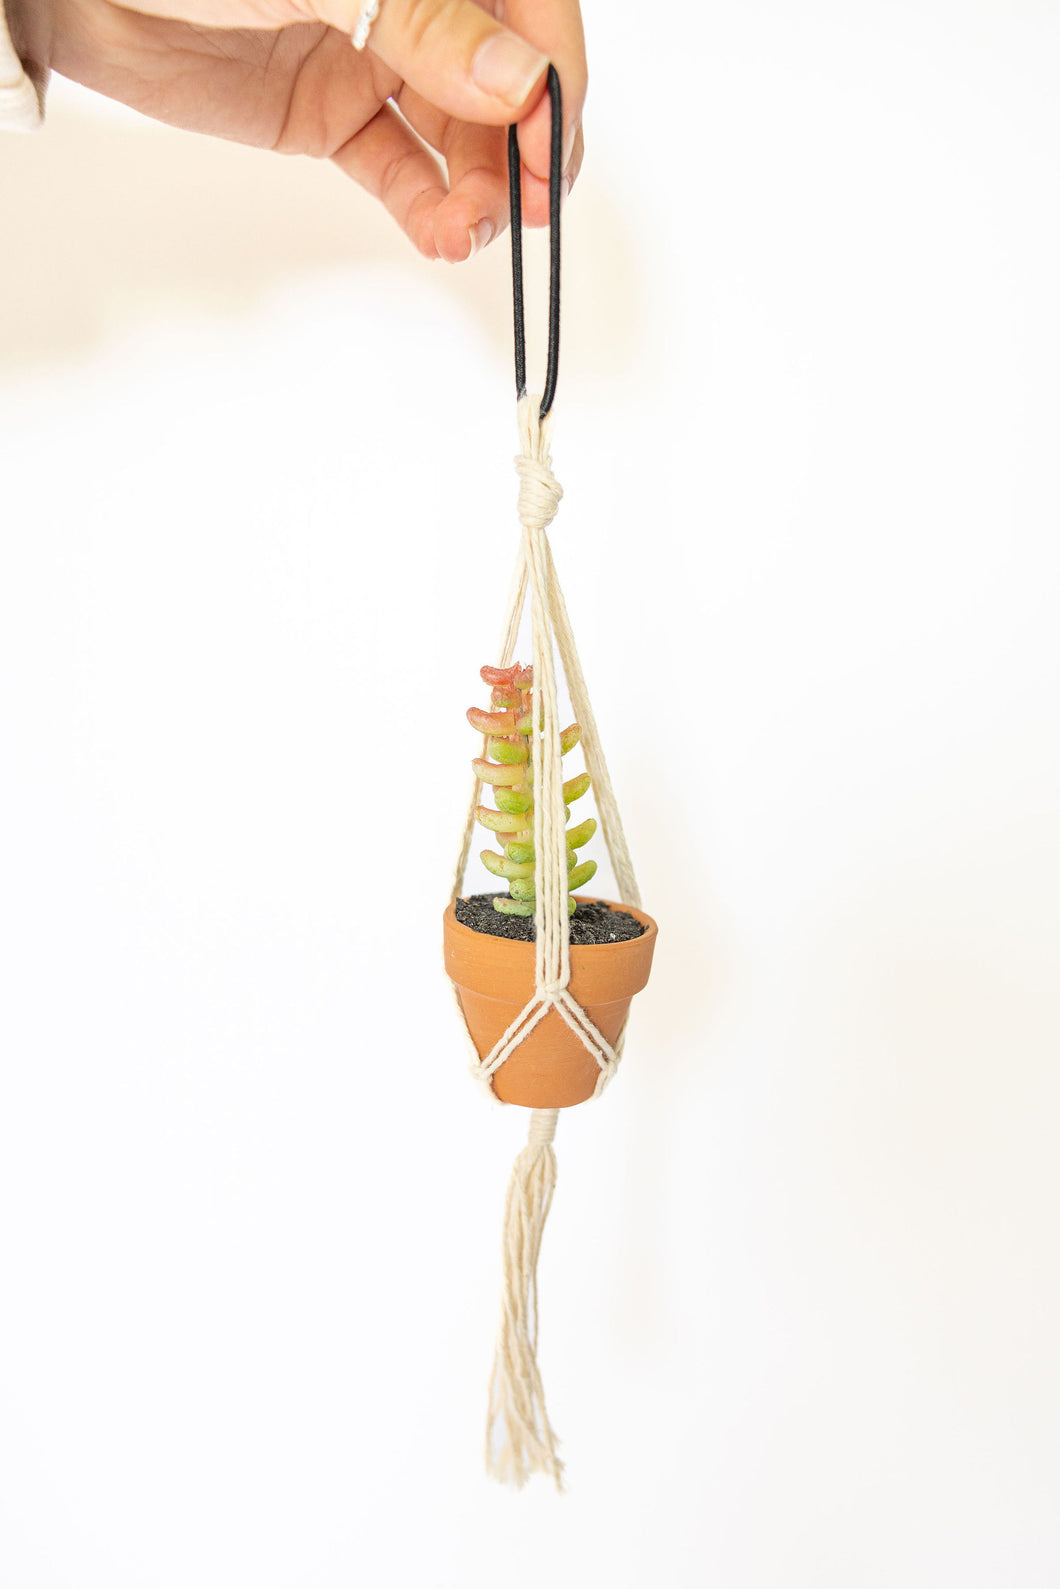 Mini macrame plant hangers for car